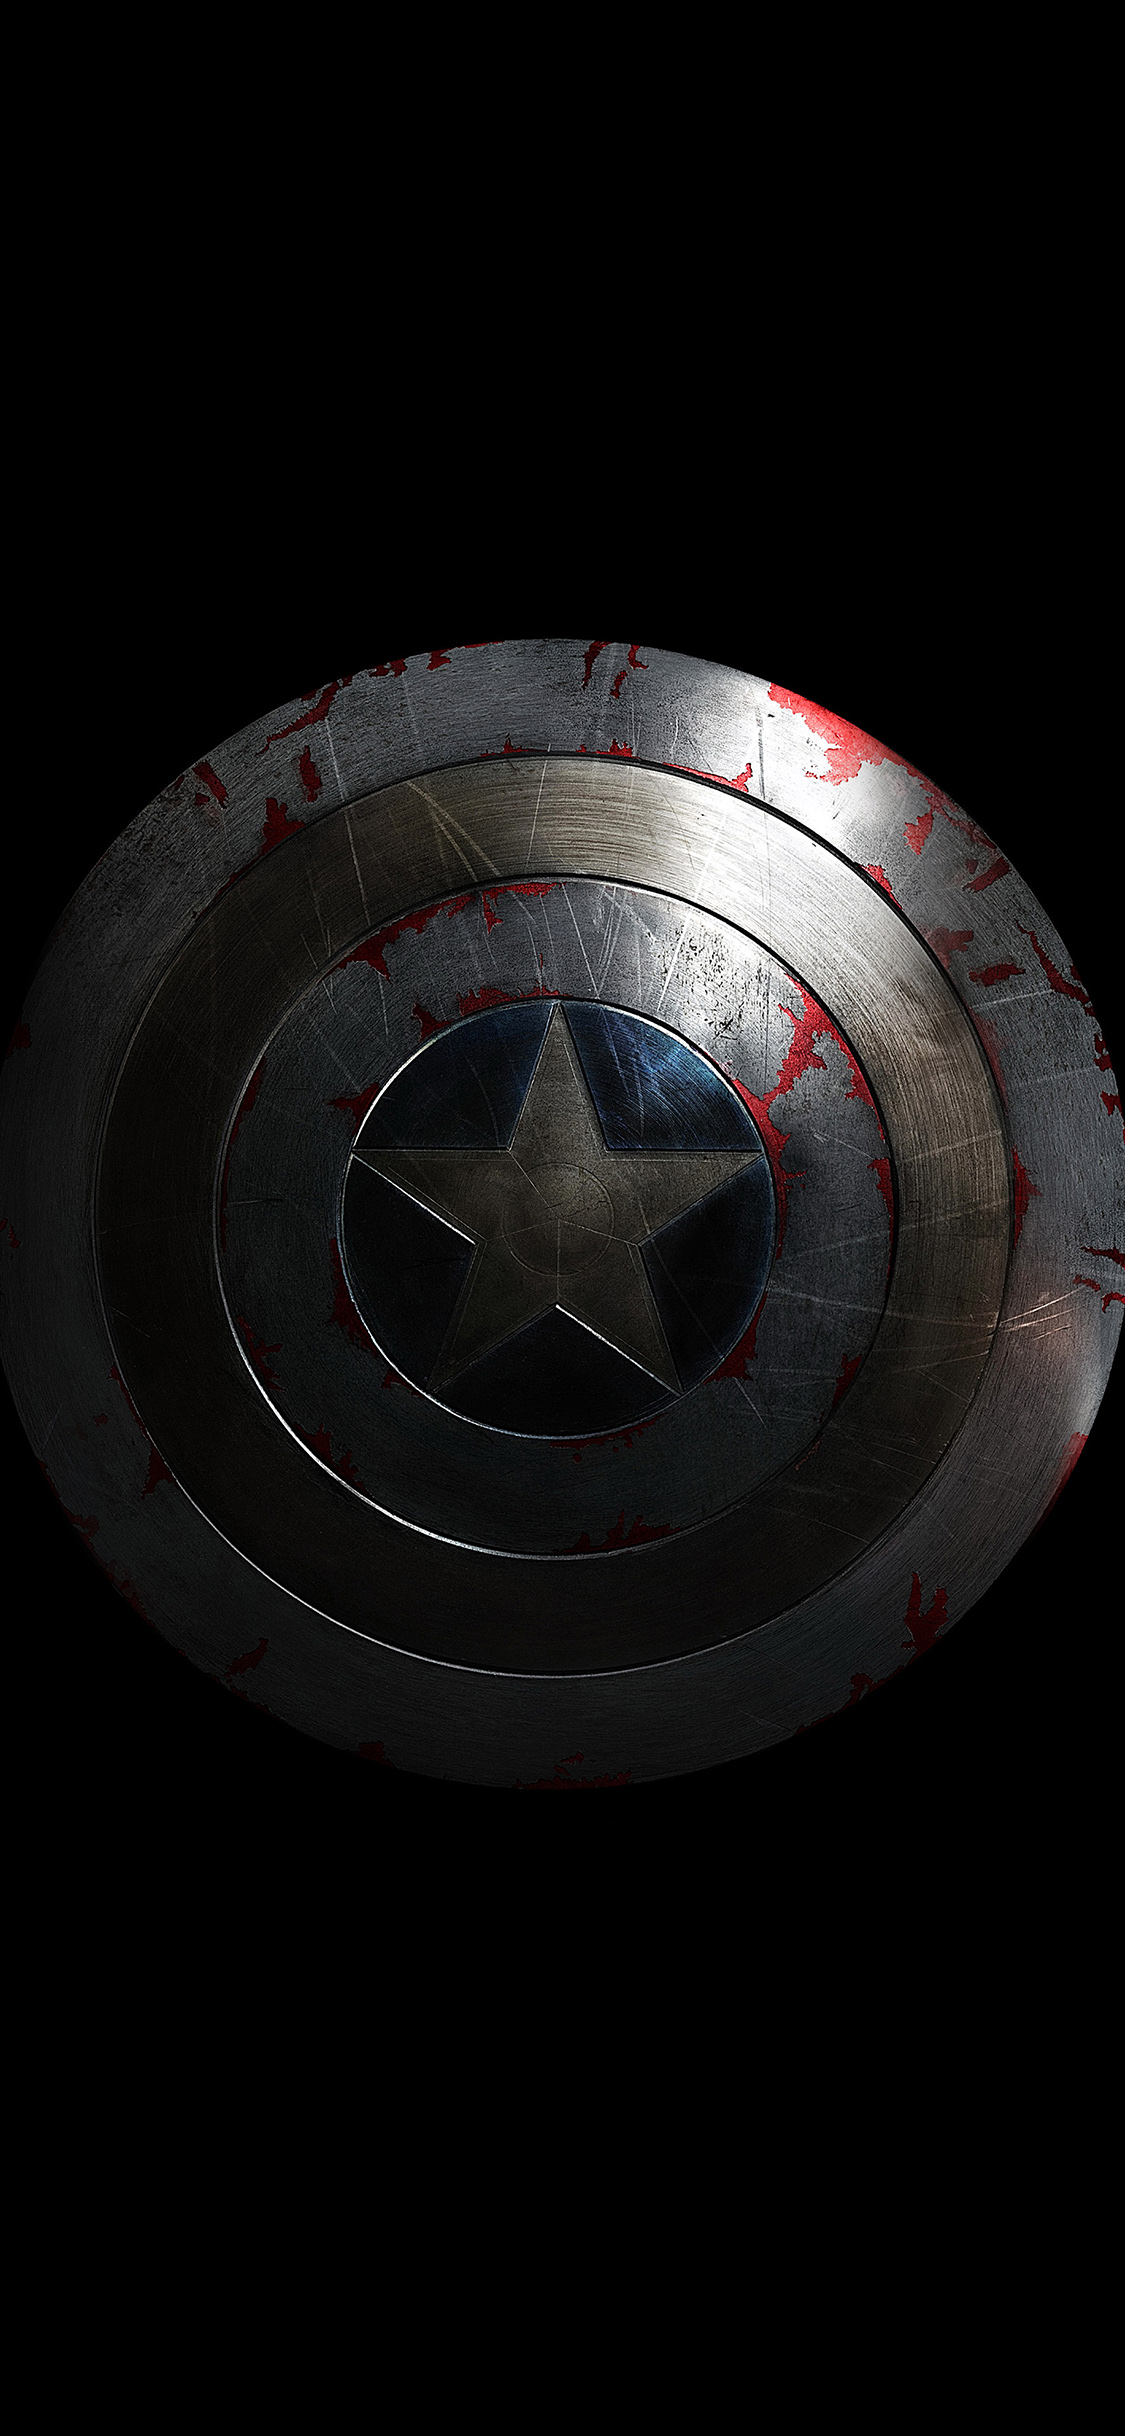 iPhone X wallpaper. captain america avengers hero sheild small dark